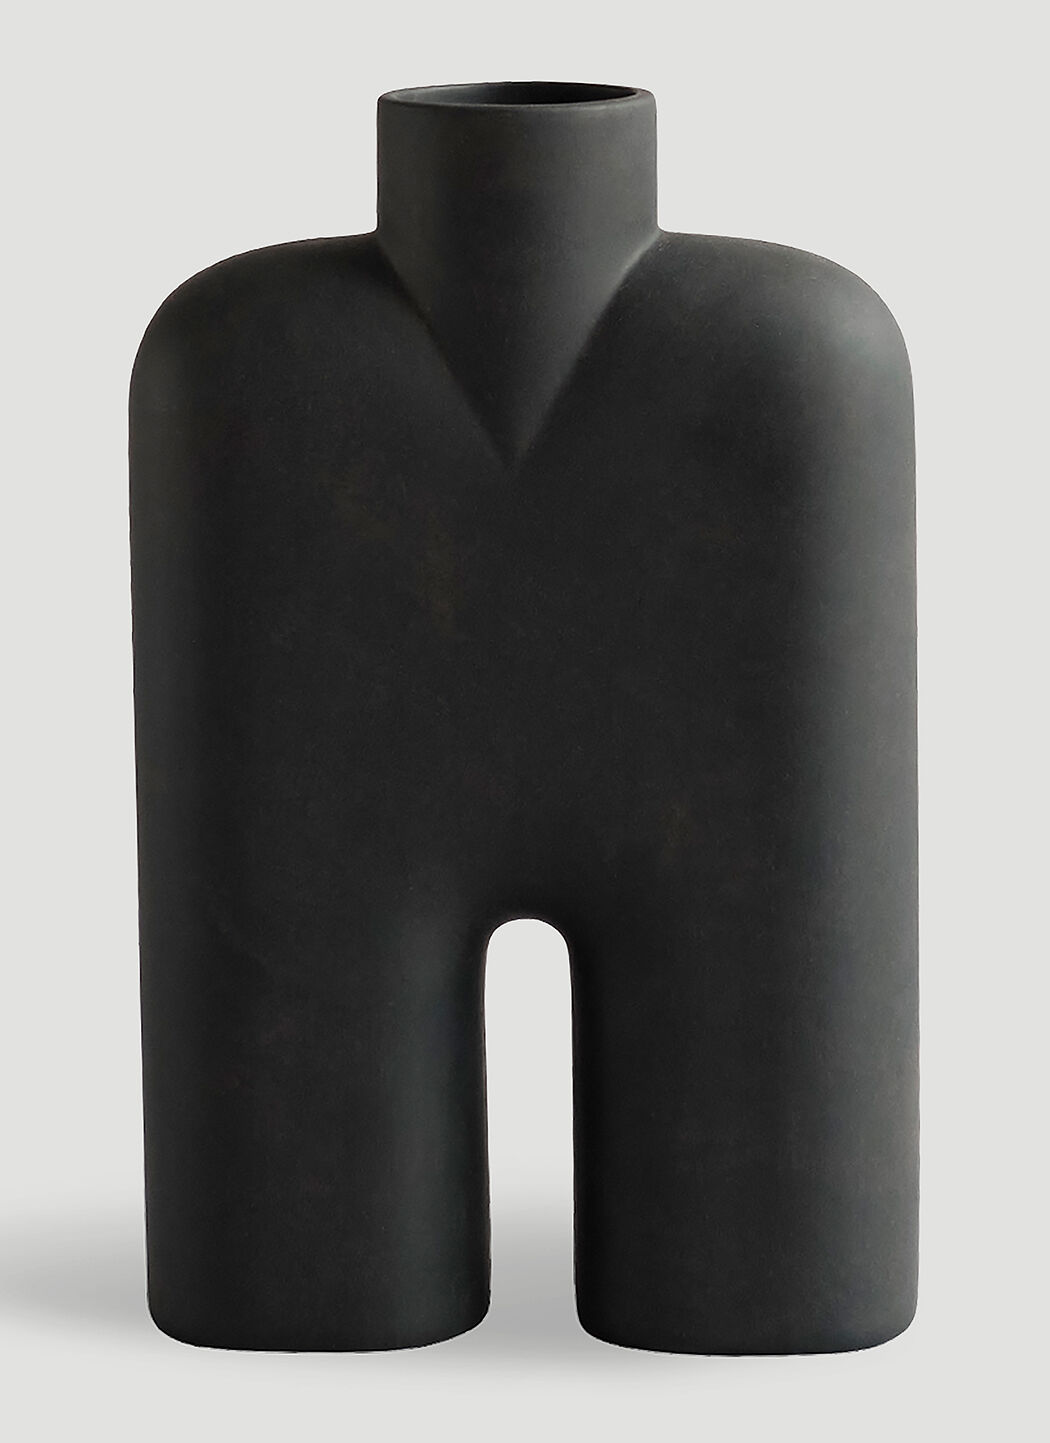 101 Copenhagen Cobra Tall Medium Vase Beige wps0670351